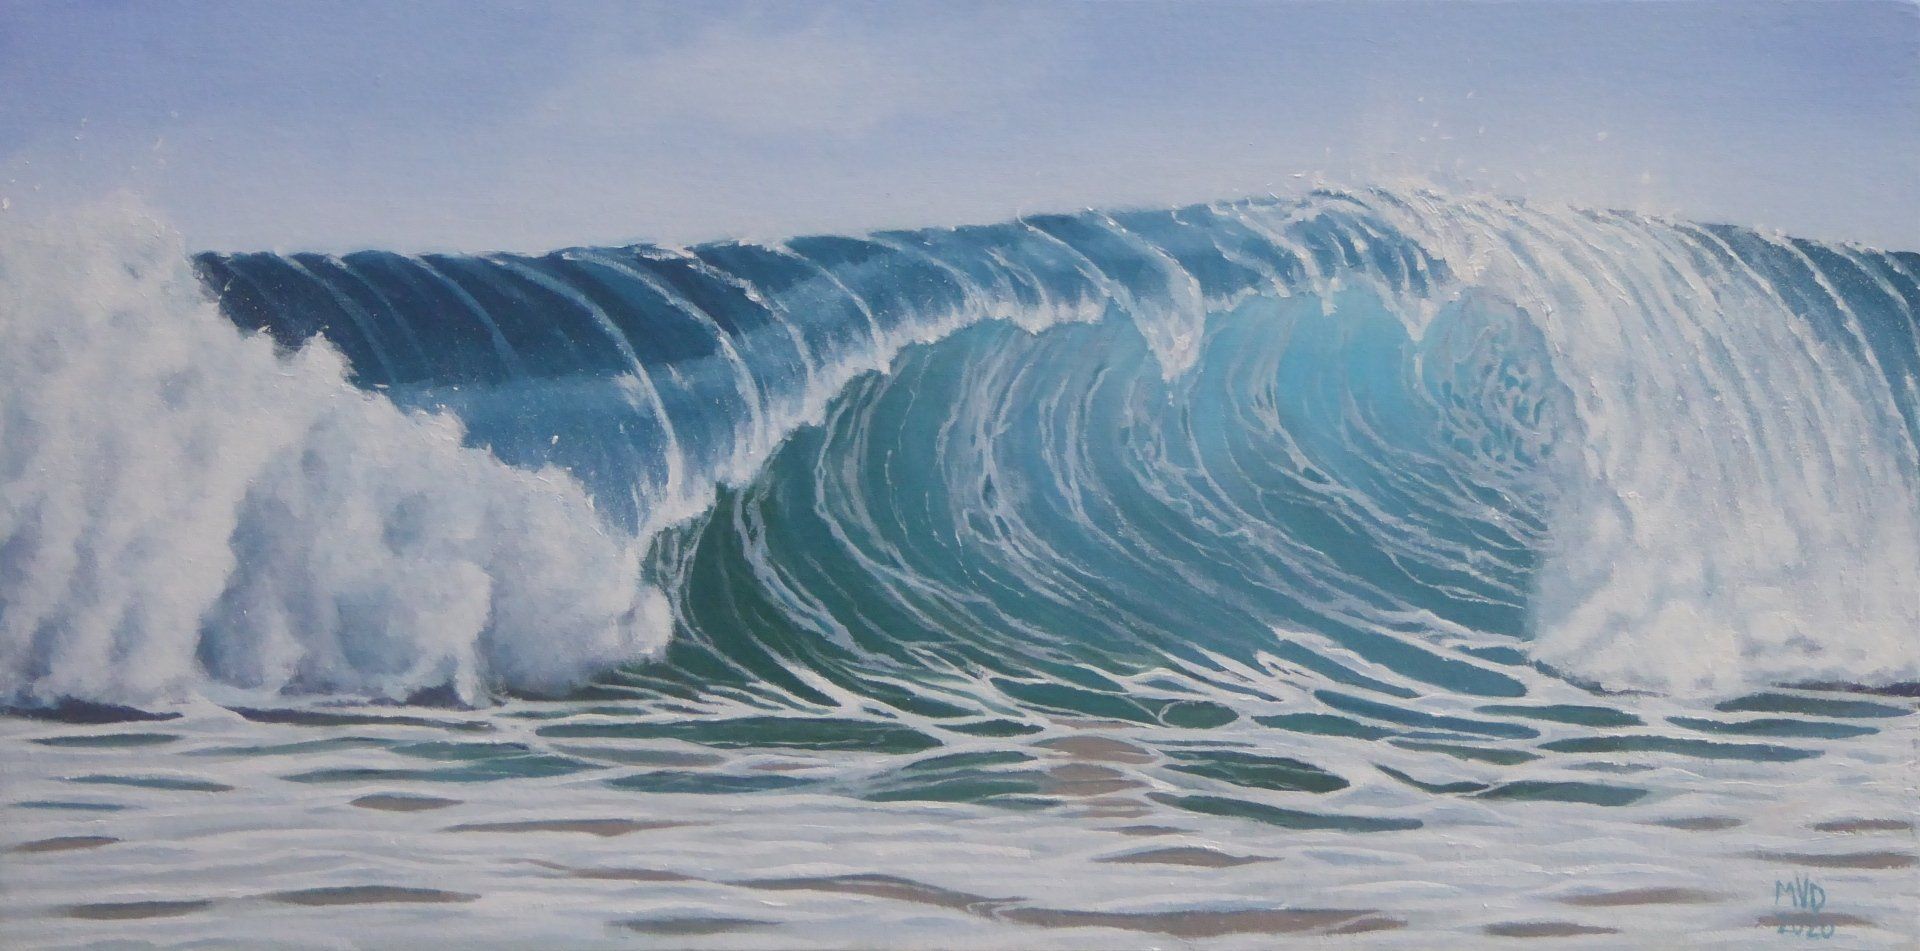 A big perfect ocean crashing barrel surfing wave.